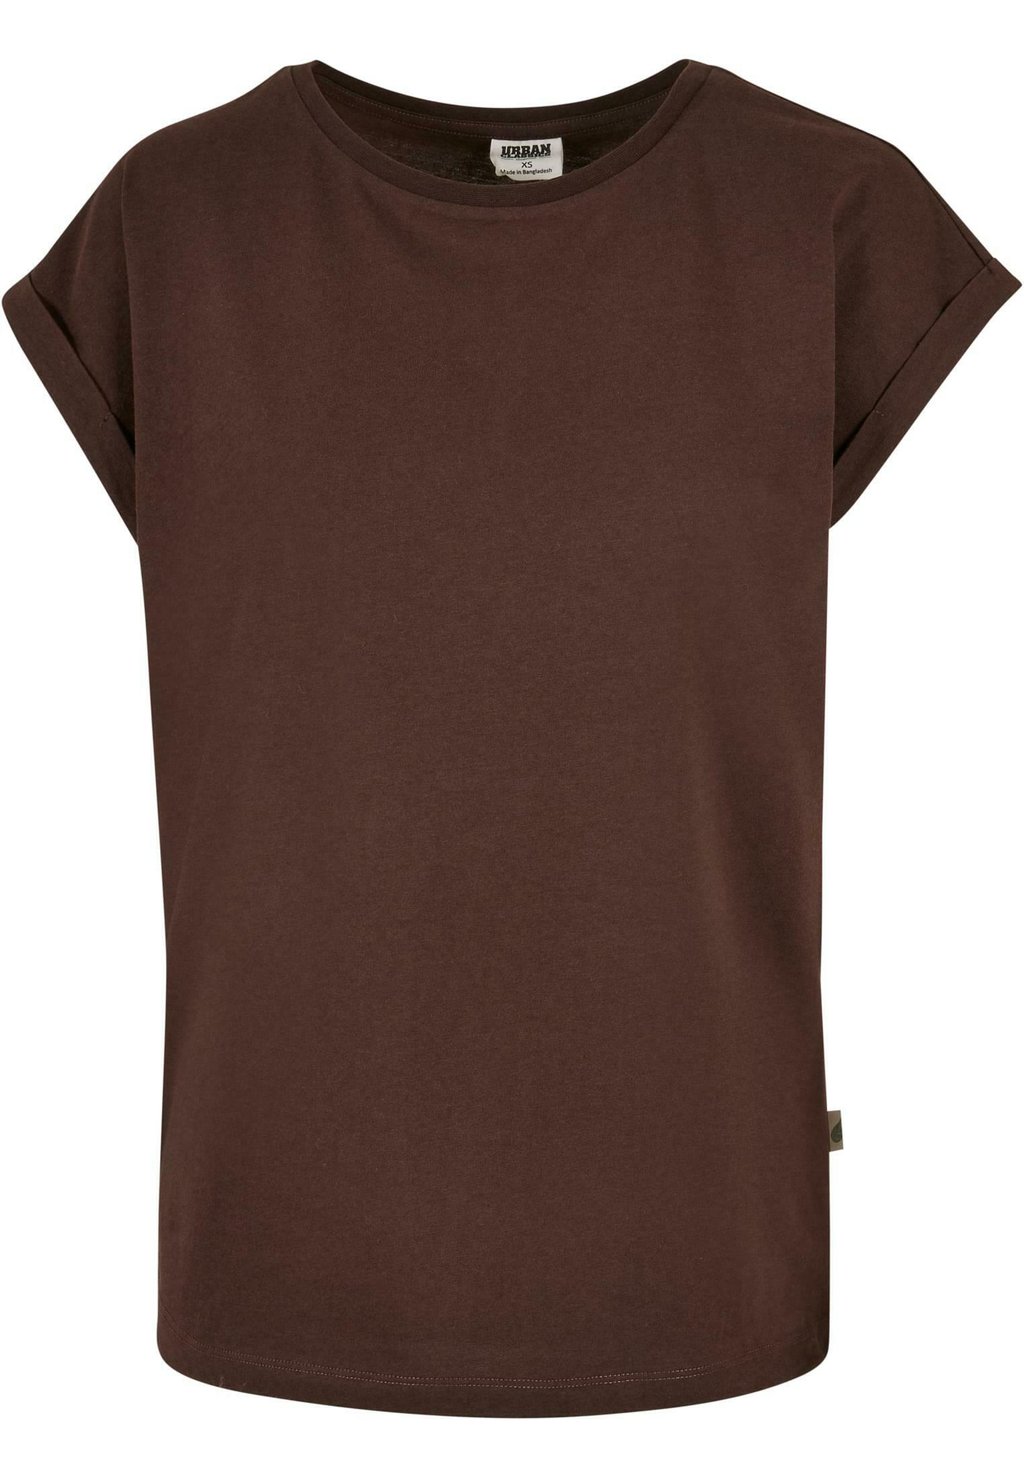 Базовая футболка Urban Classics, коричневый базовая футболка коричневый